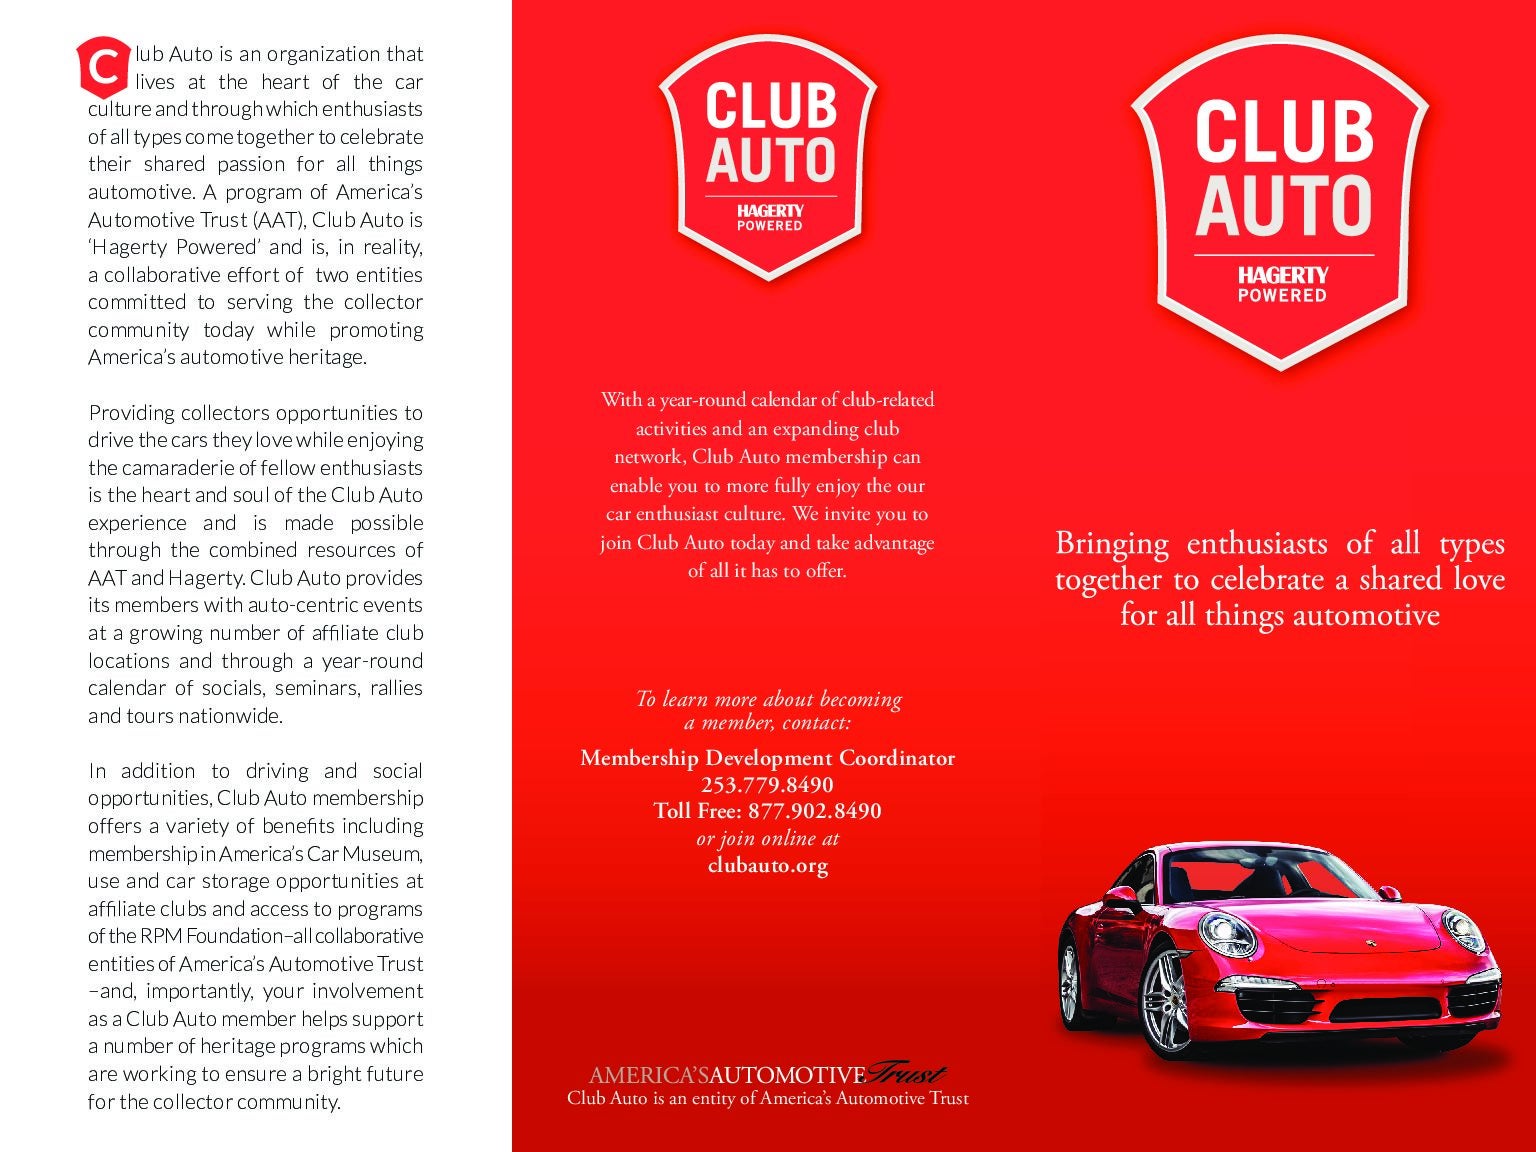 Club Racing Experience - Sports Car Club of America